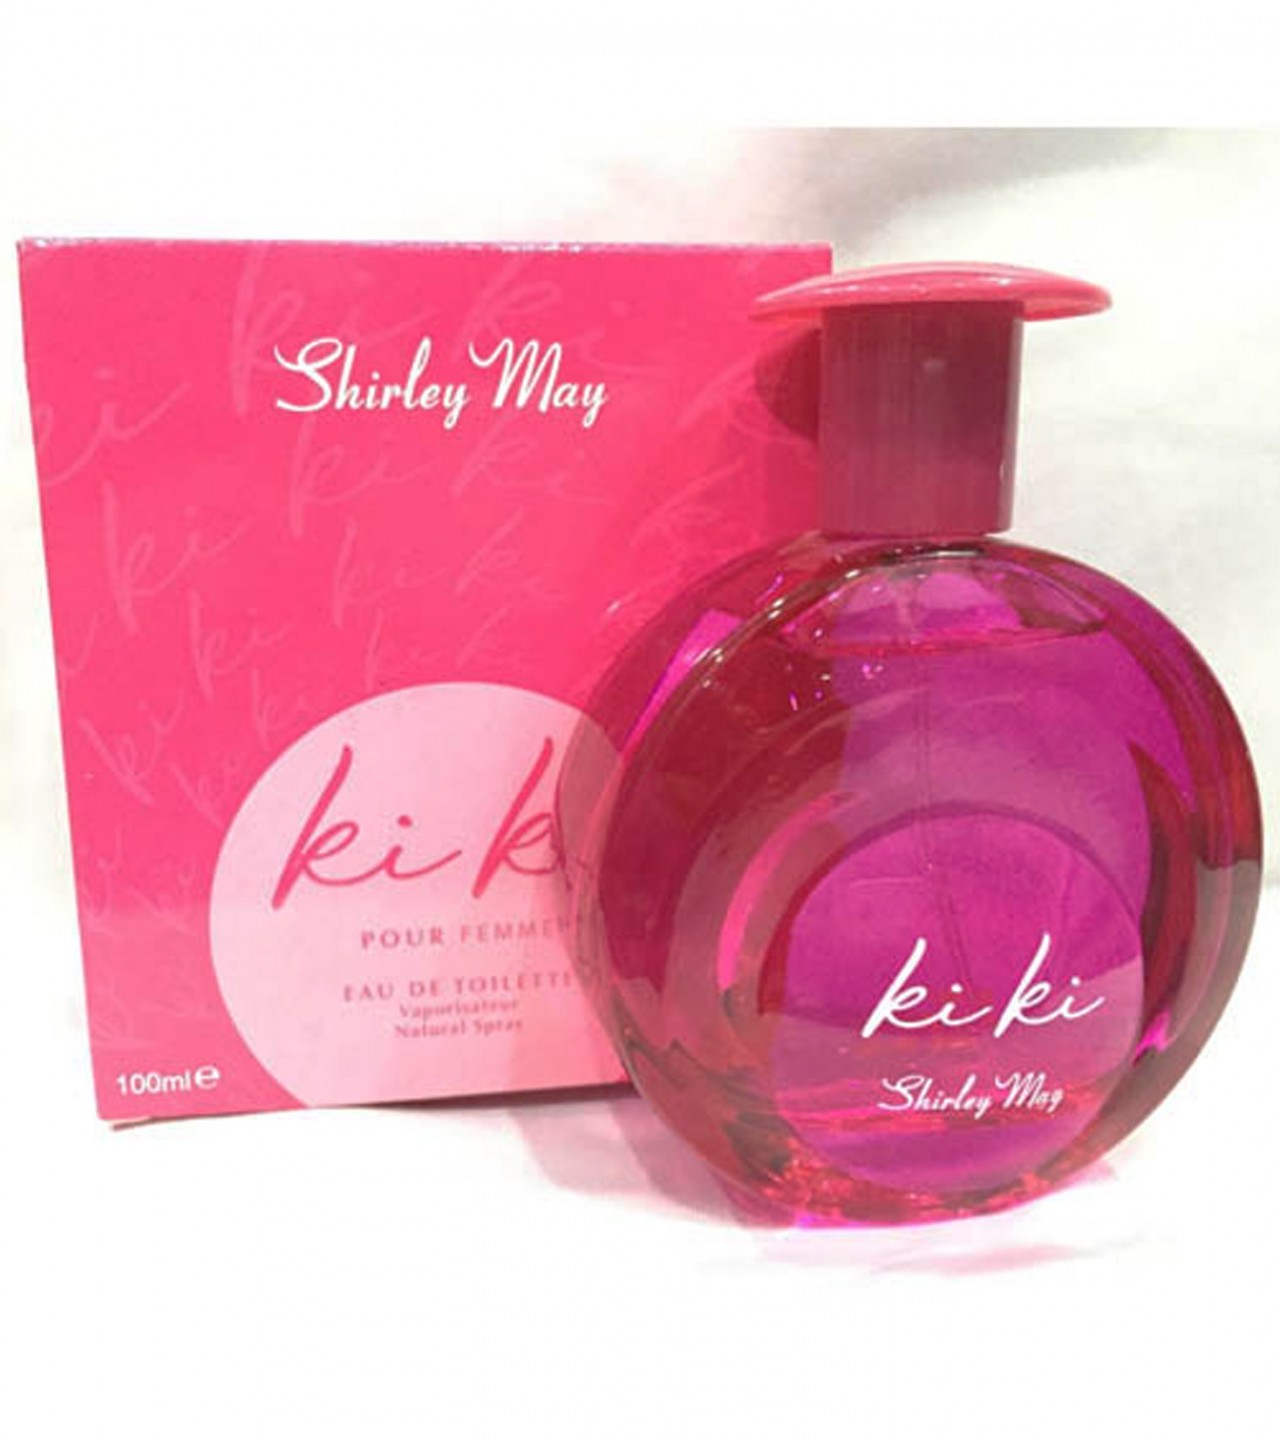 Shirley May kiki Perfume For Women - 100 ml